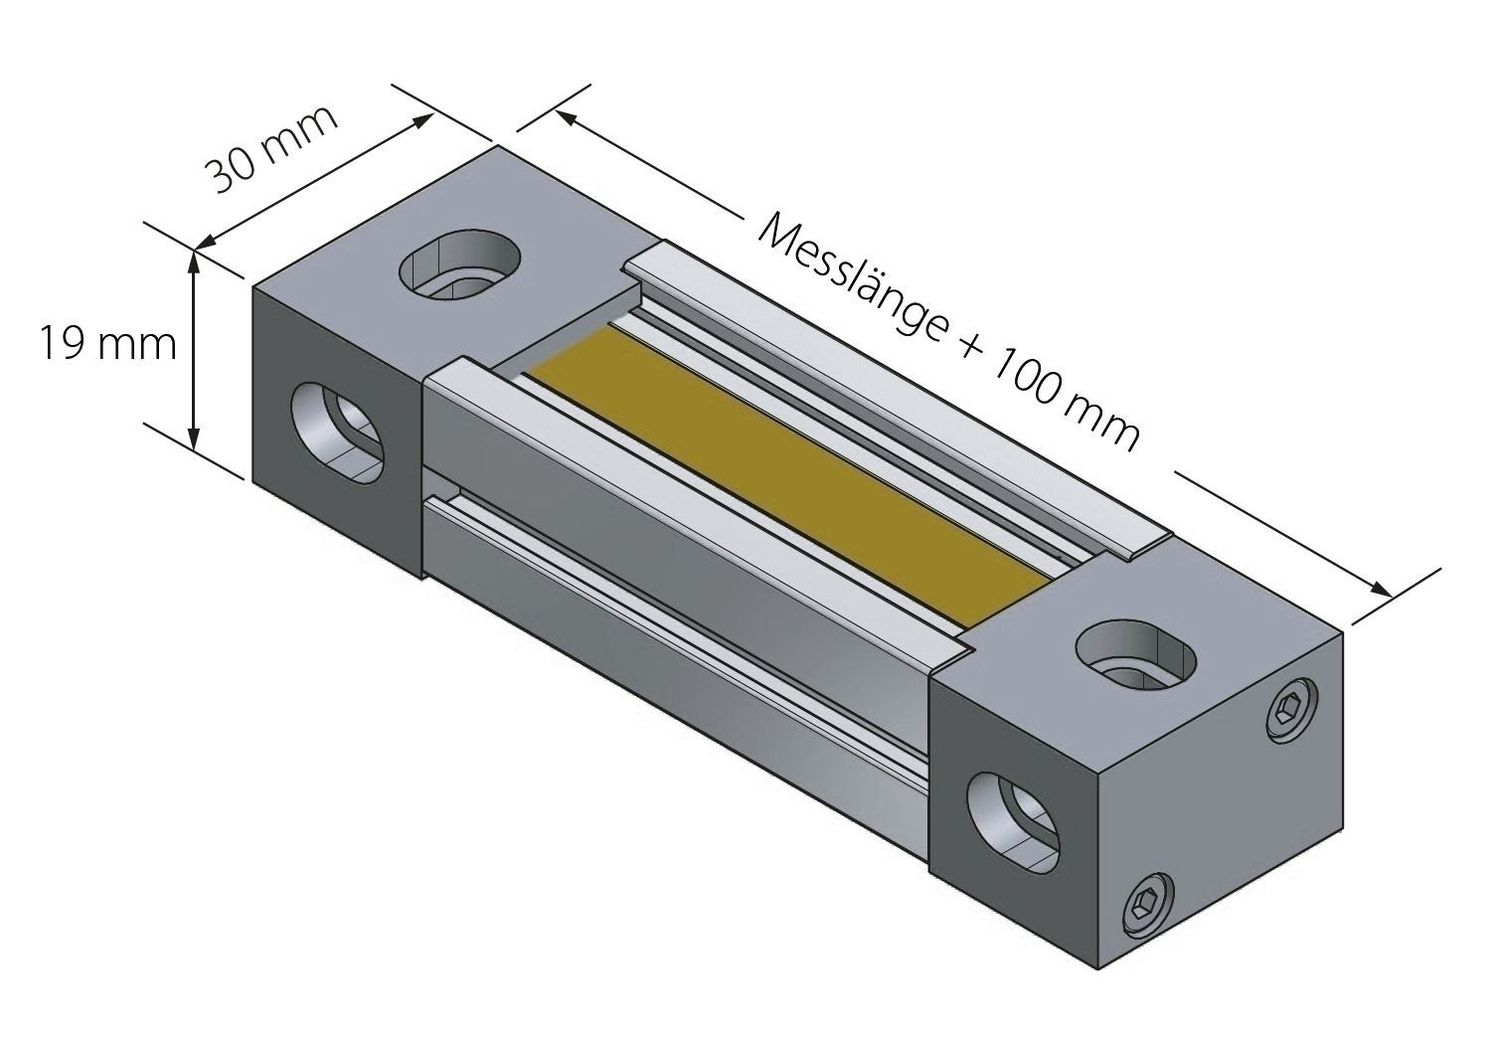 K+C Magnetmaßstab MS10A 250 mm - 5 µm | Verfahrweg 270 mm